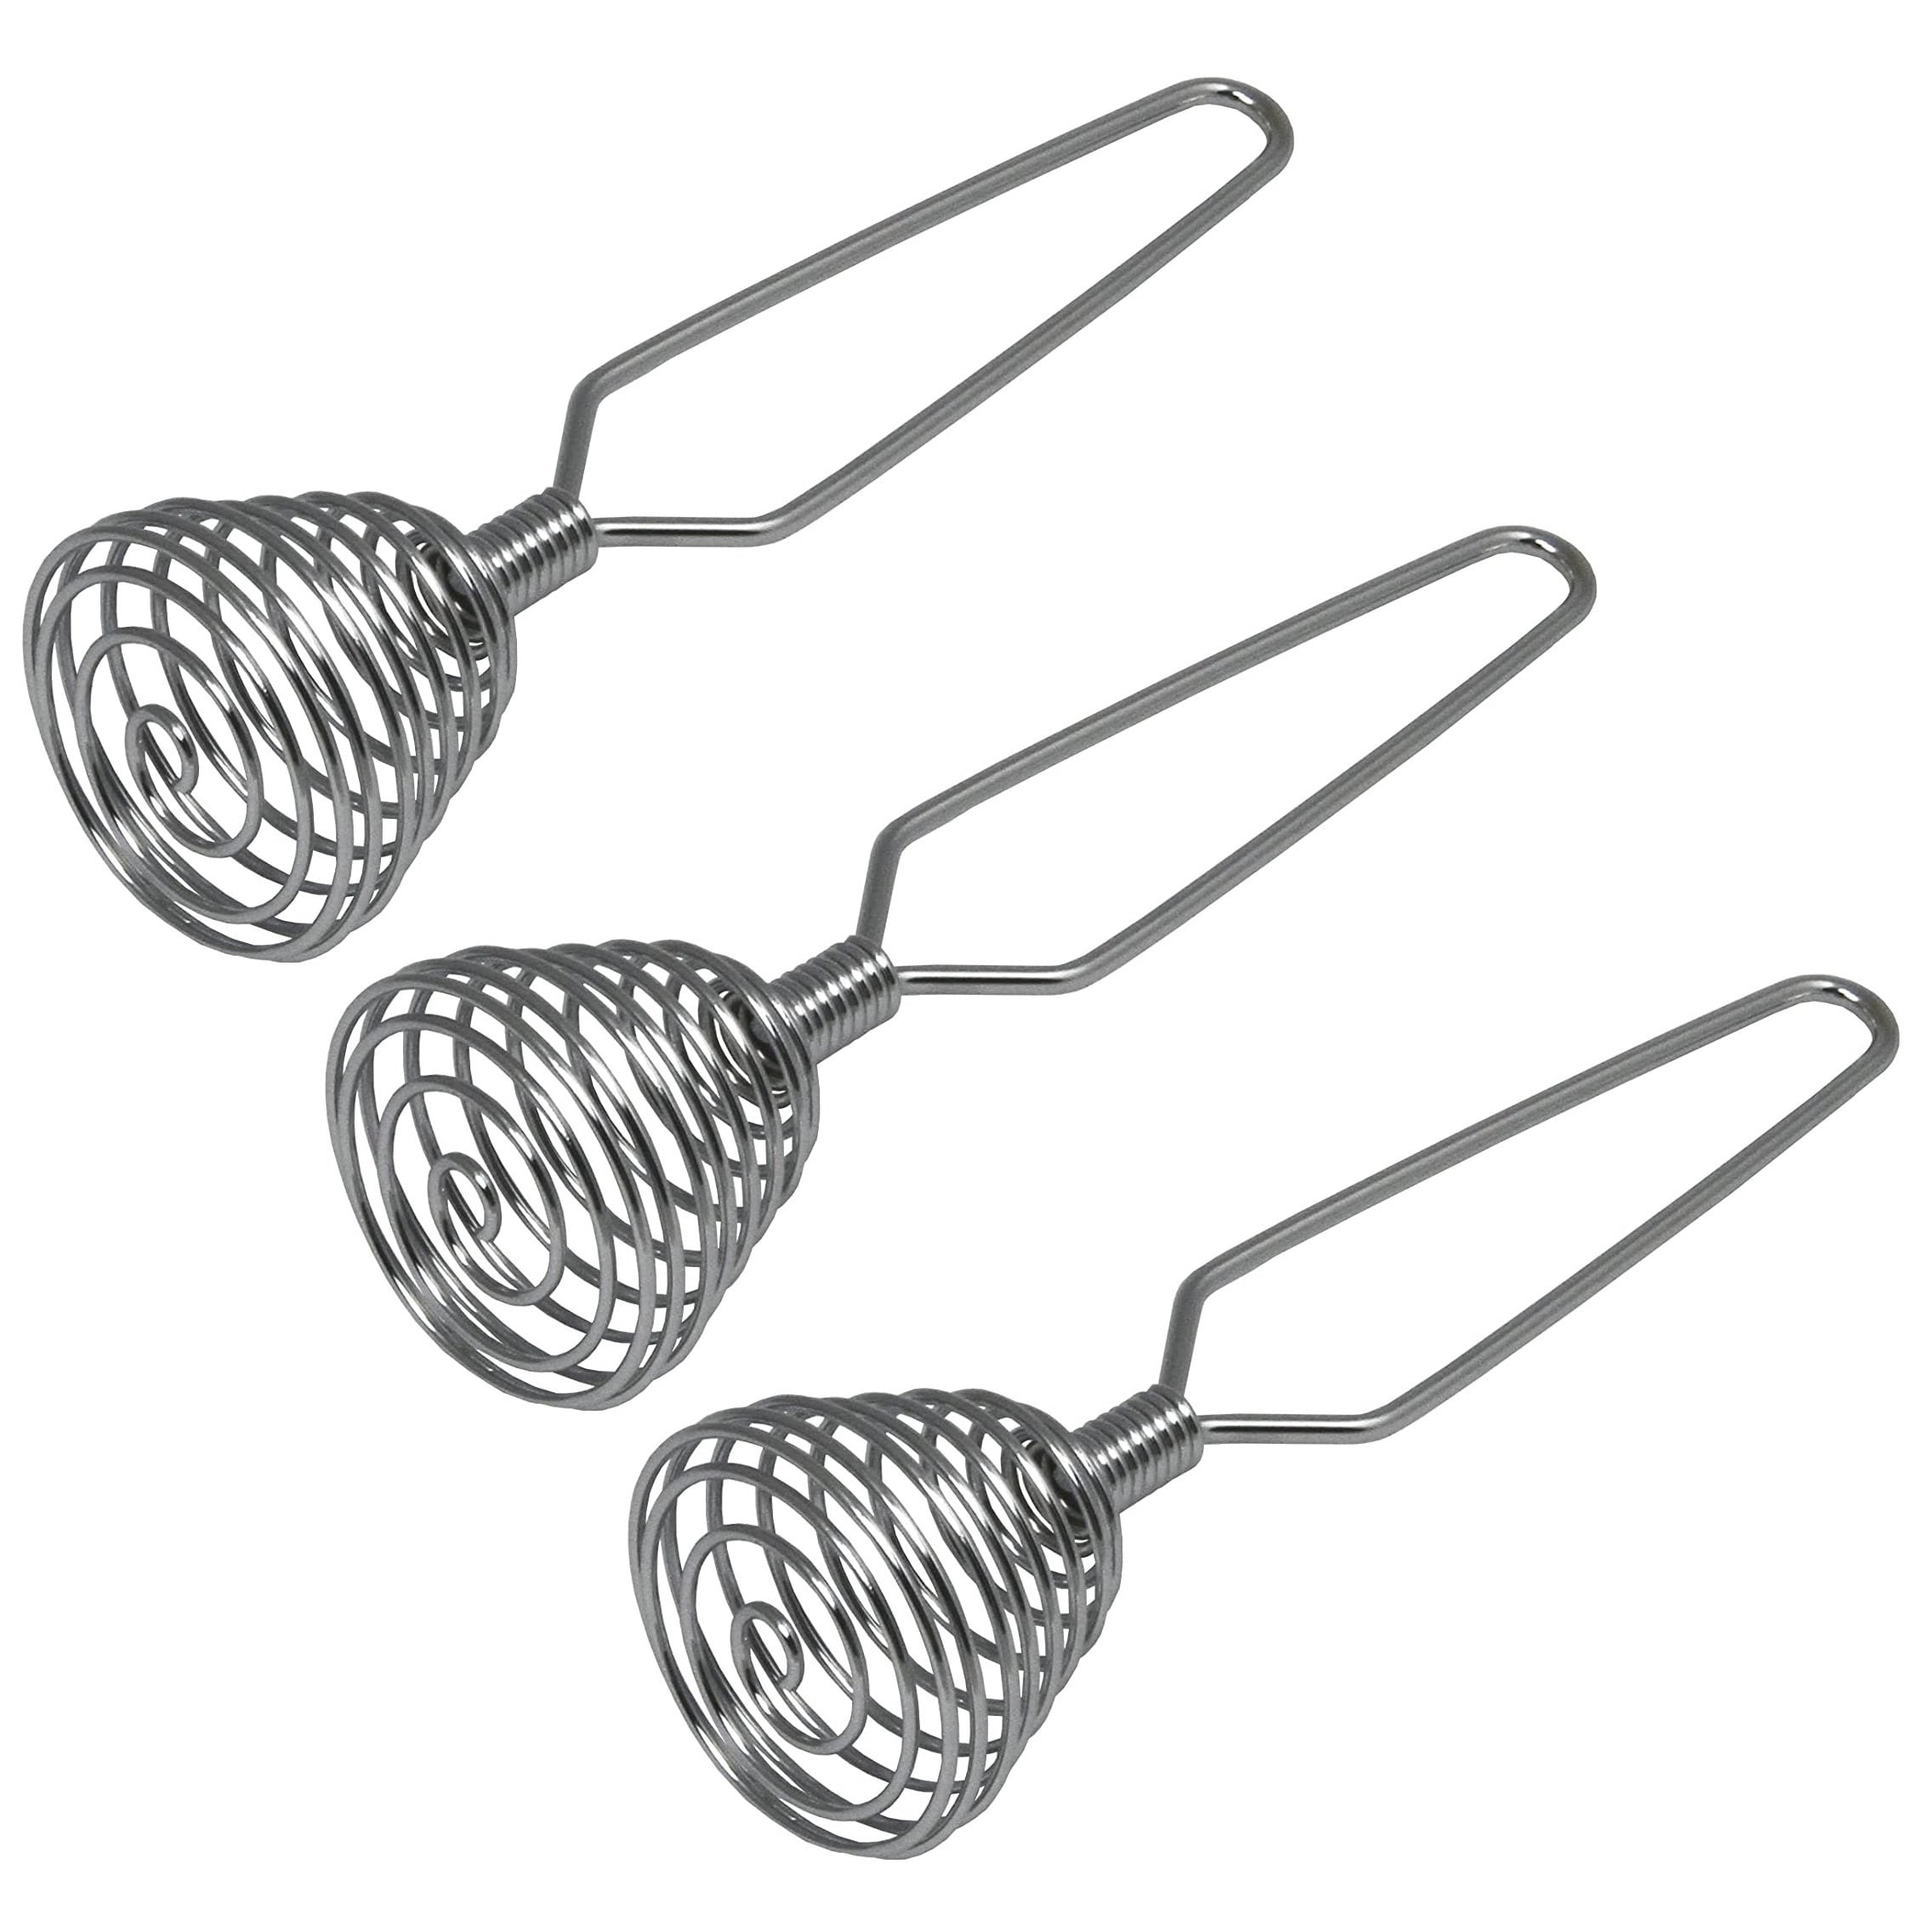 Spring Coil Wire Whisk Hand Mixer Blender Egg Beater Stainless Steel Tool 